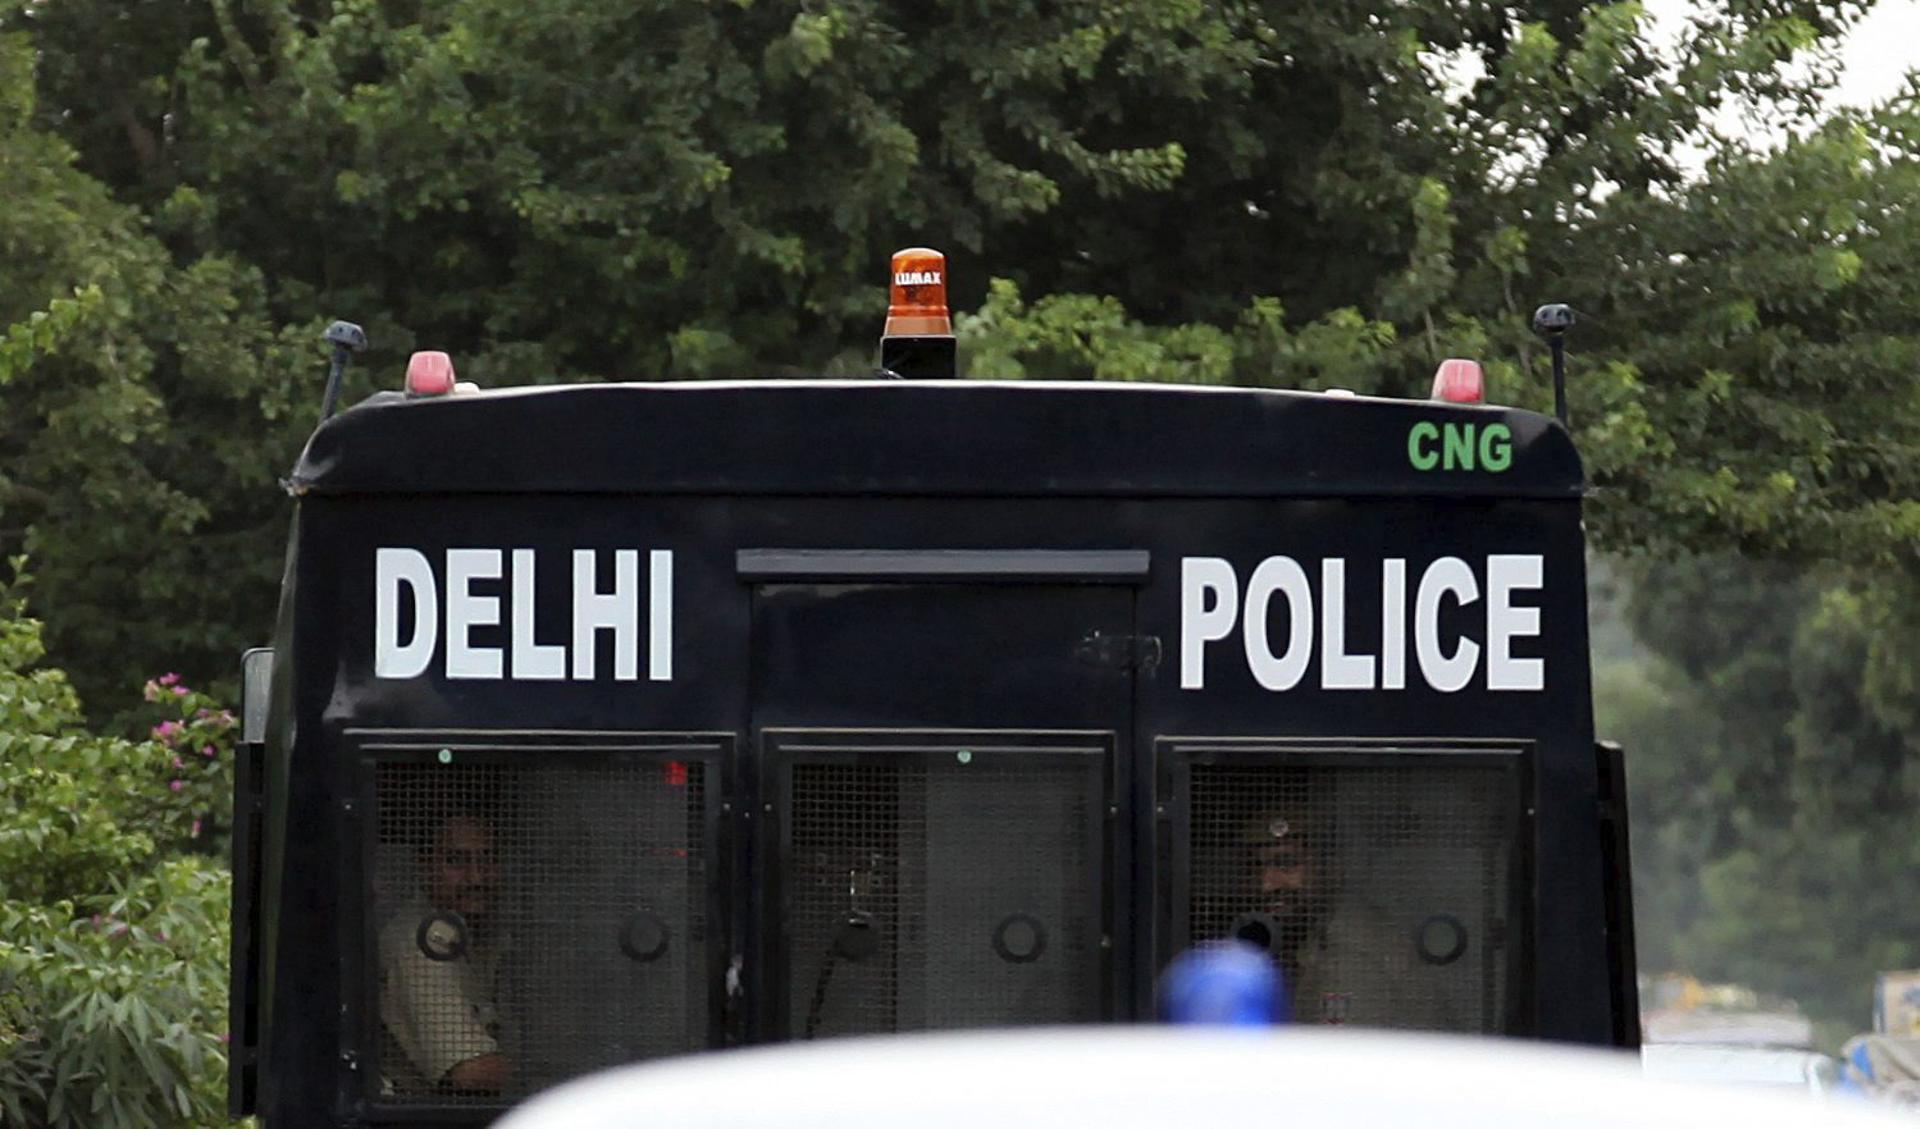 A file photo shows a Delhi police van in New Delhi, India, 10 September 2013. EPA/FILE/MONEY SHARMA